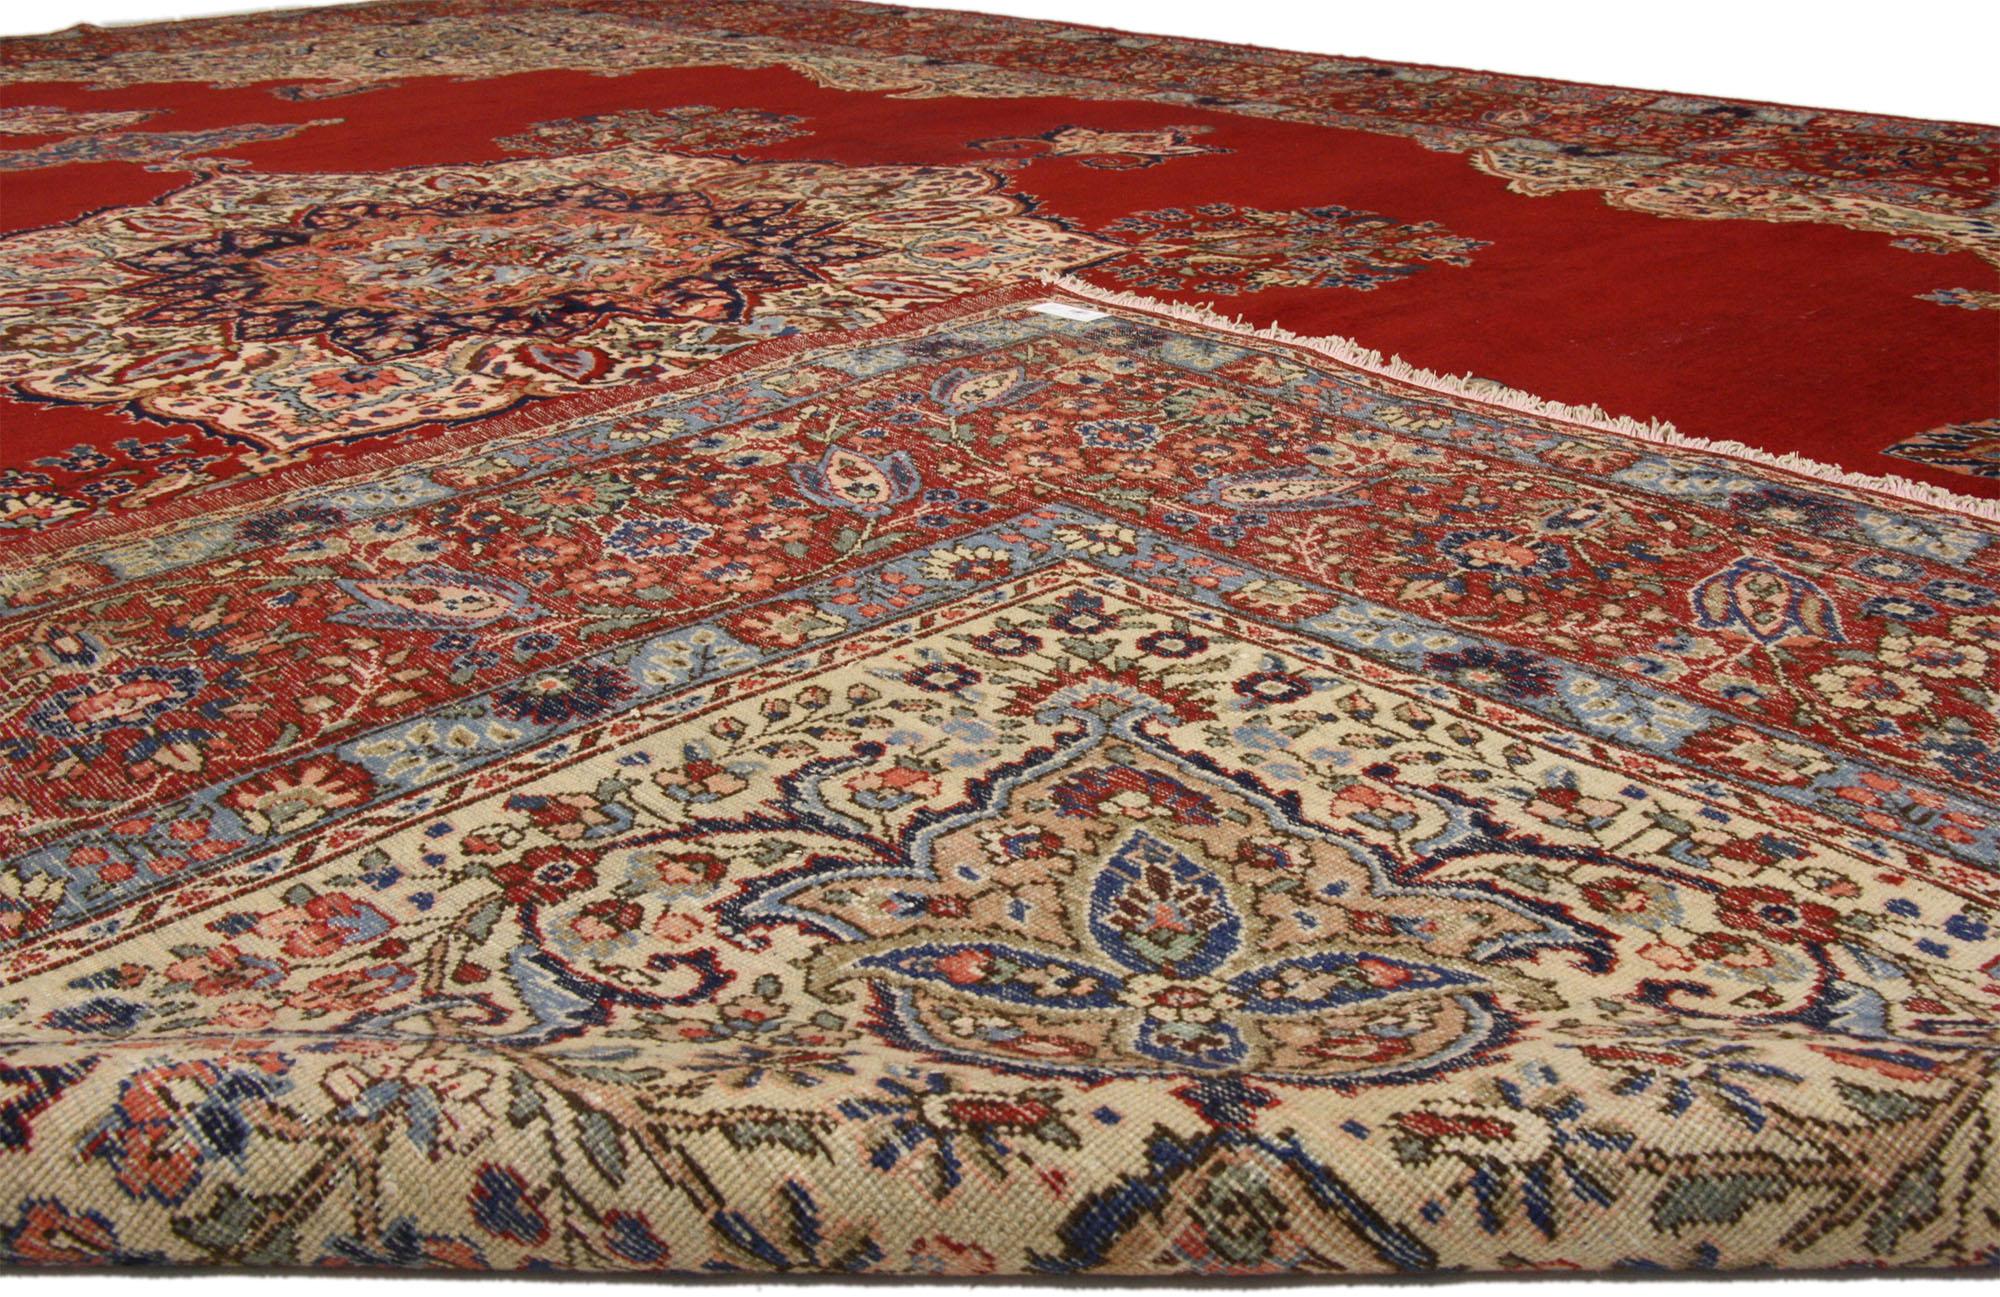 Antique Persian Tabriz Rug, 11'09 x 17'06  In Good Condition For Sale In Dallas, TX